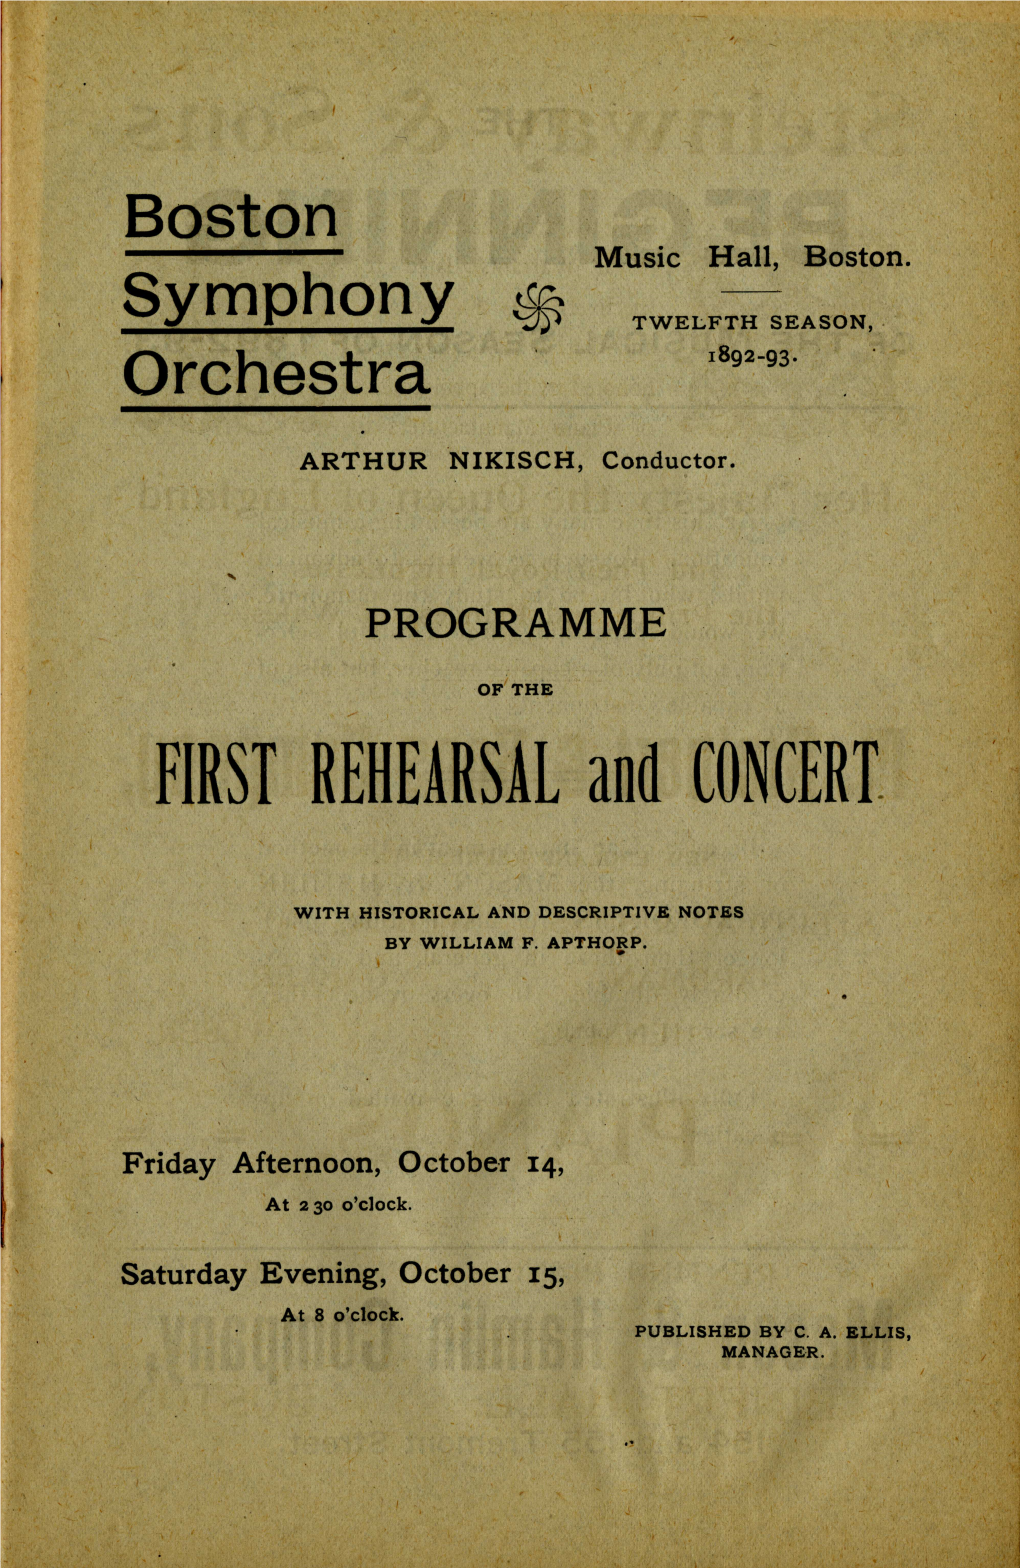 Boston Symphony Orchestra Concert Programs, Season 12, 1892